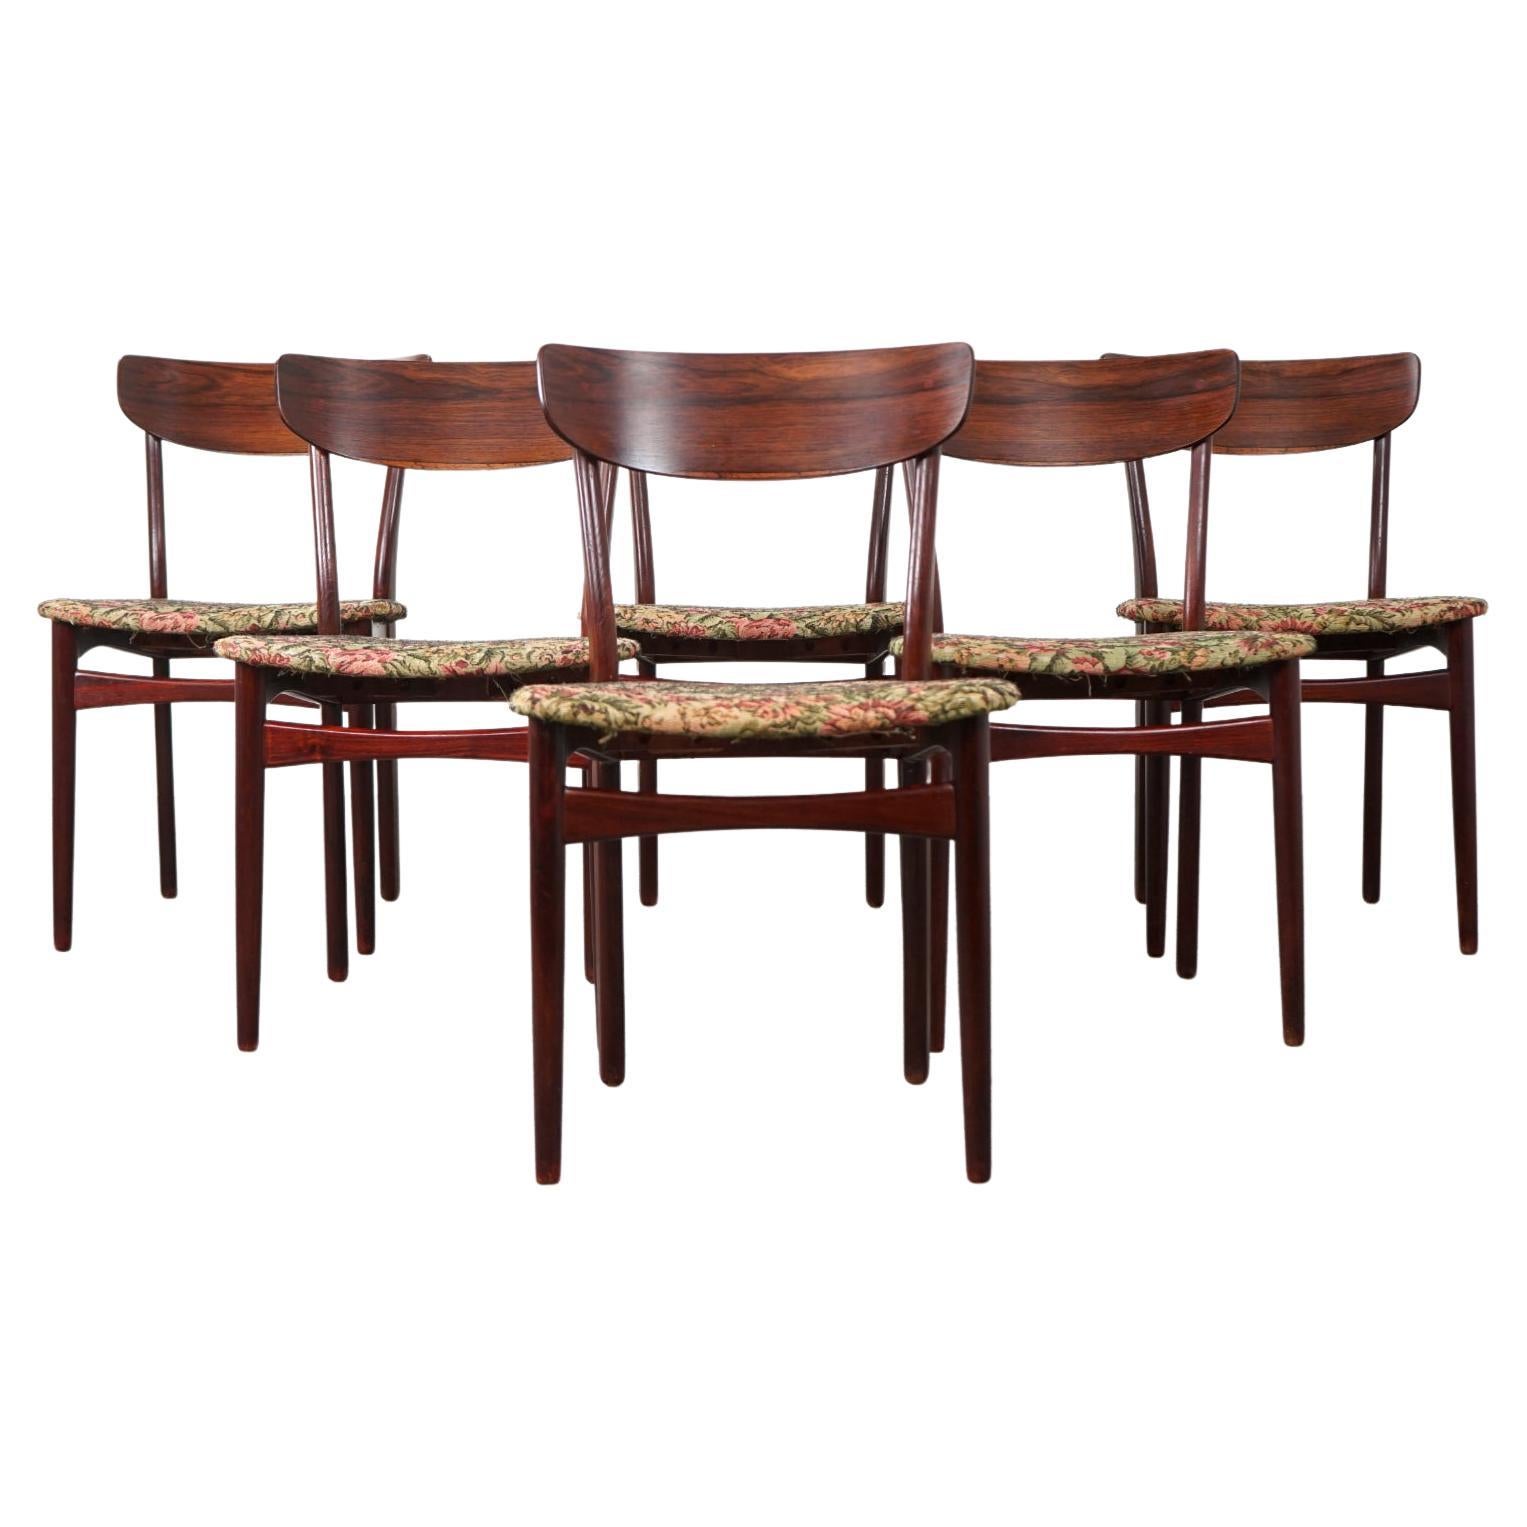 Set of 6 Danish Mid-Century Modern Rosewood Dining Chairs